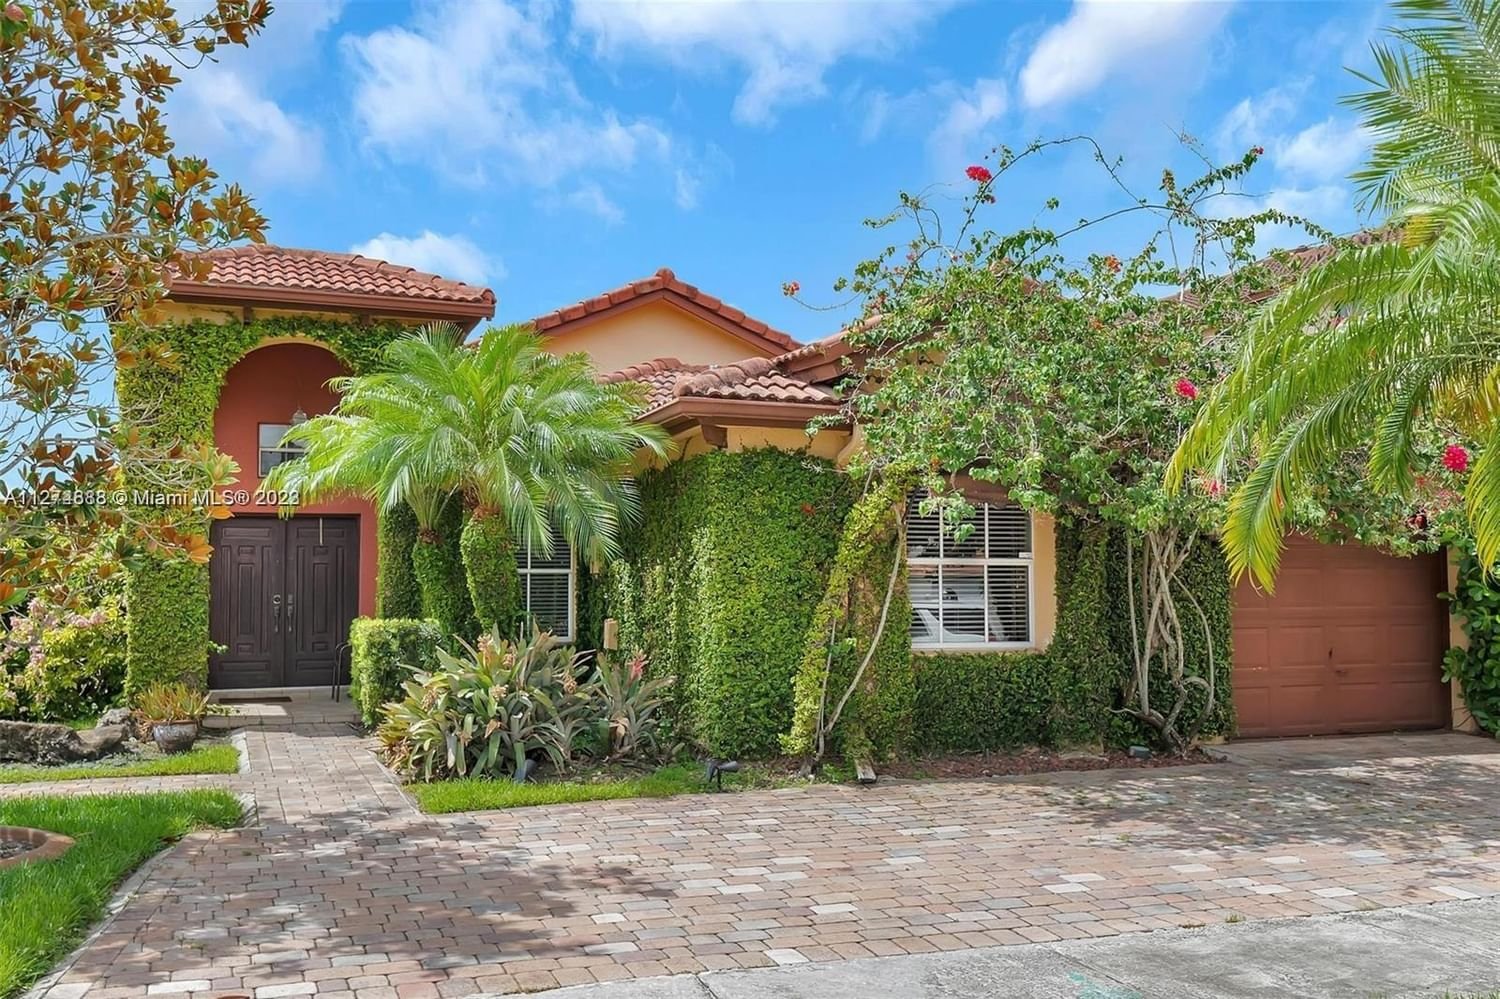 Real estate property located at 13242 10th Ter, Miami-Dade County, Miami, FL